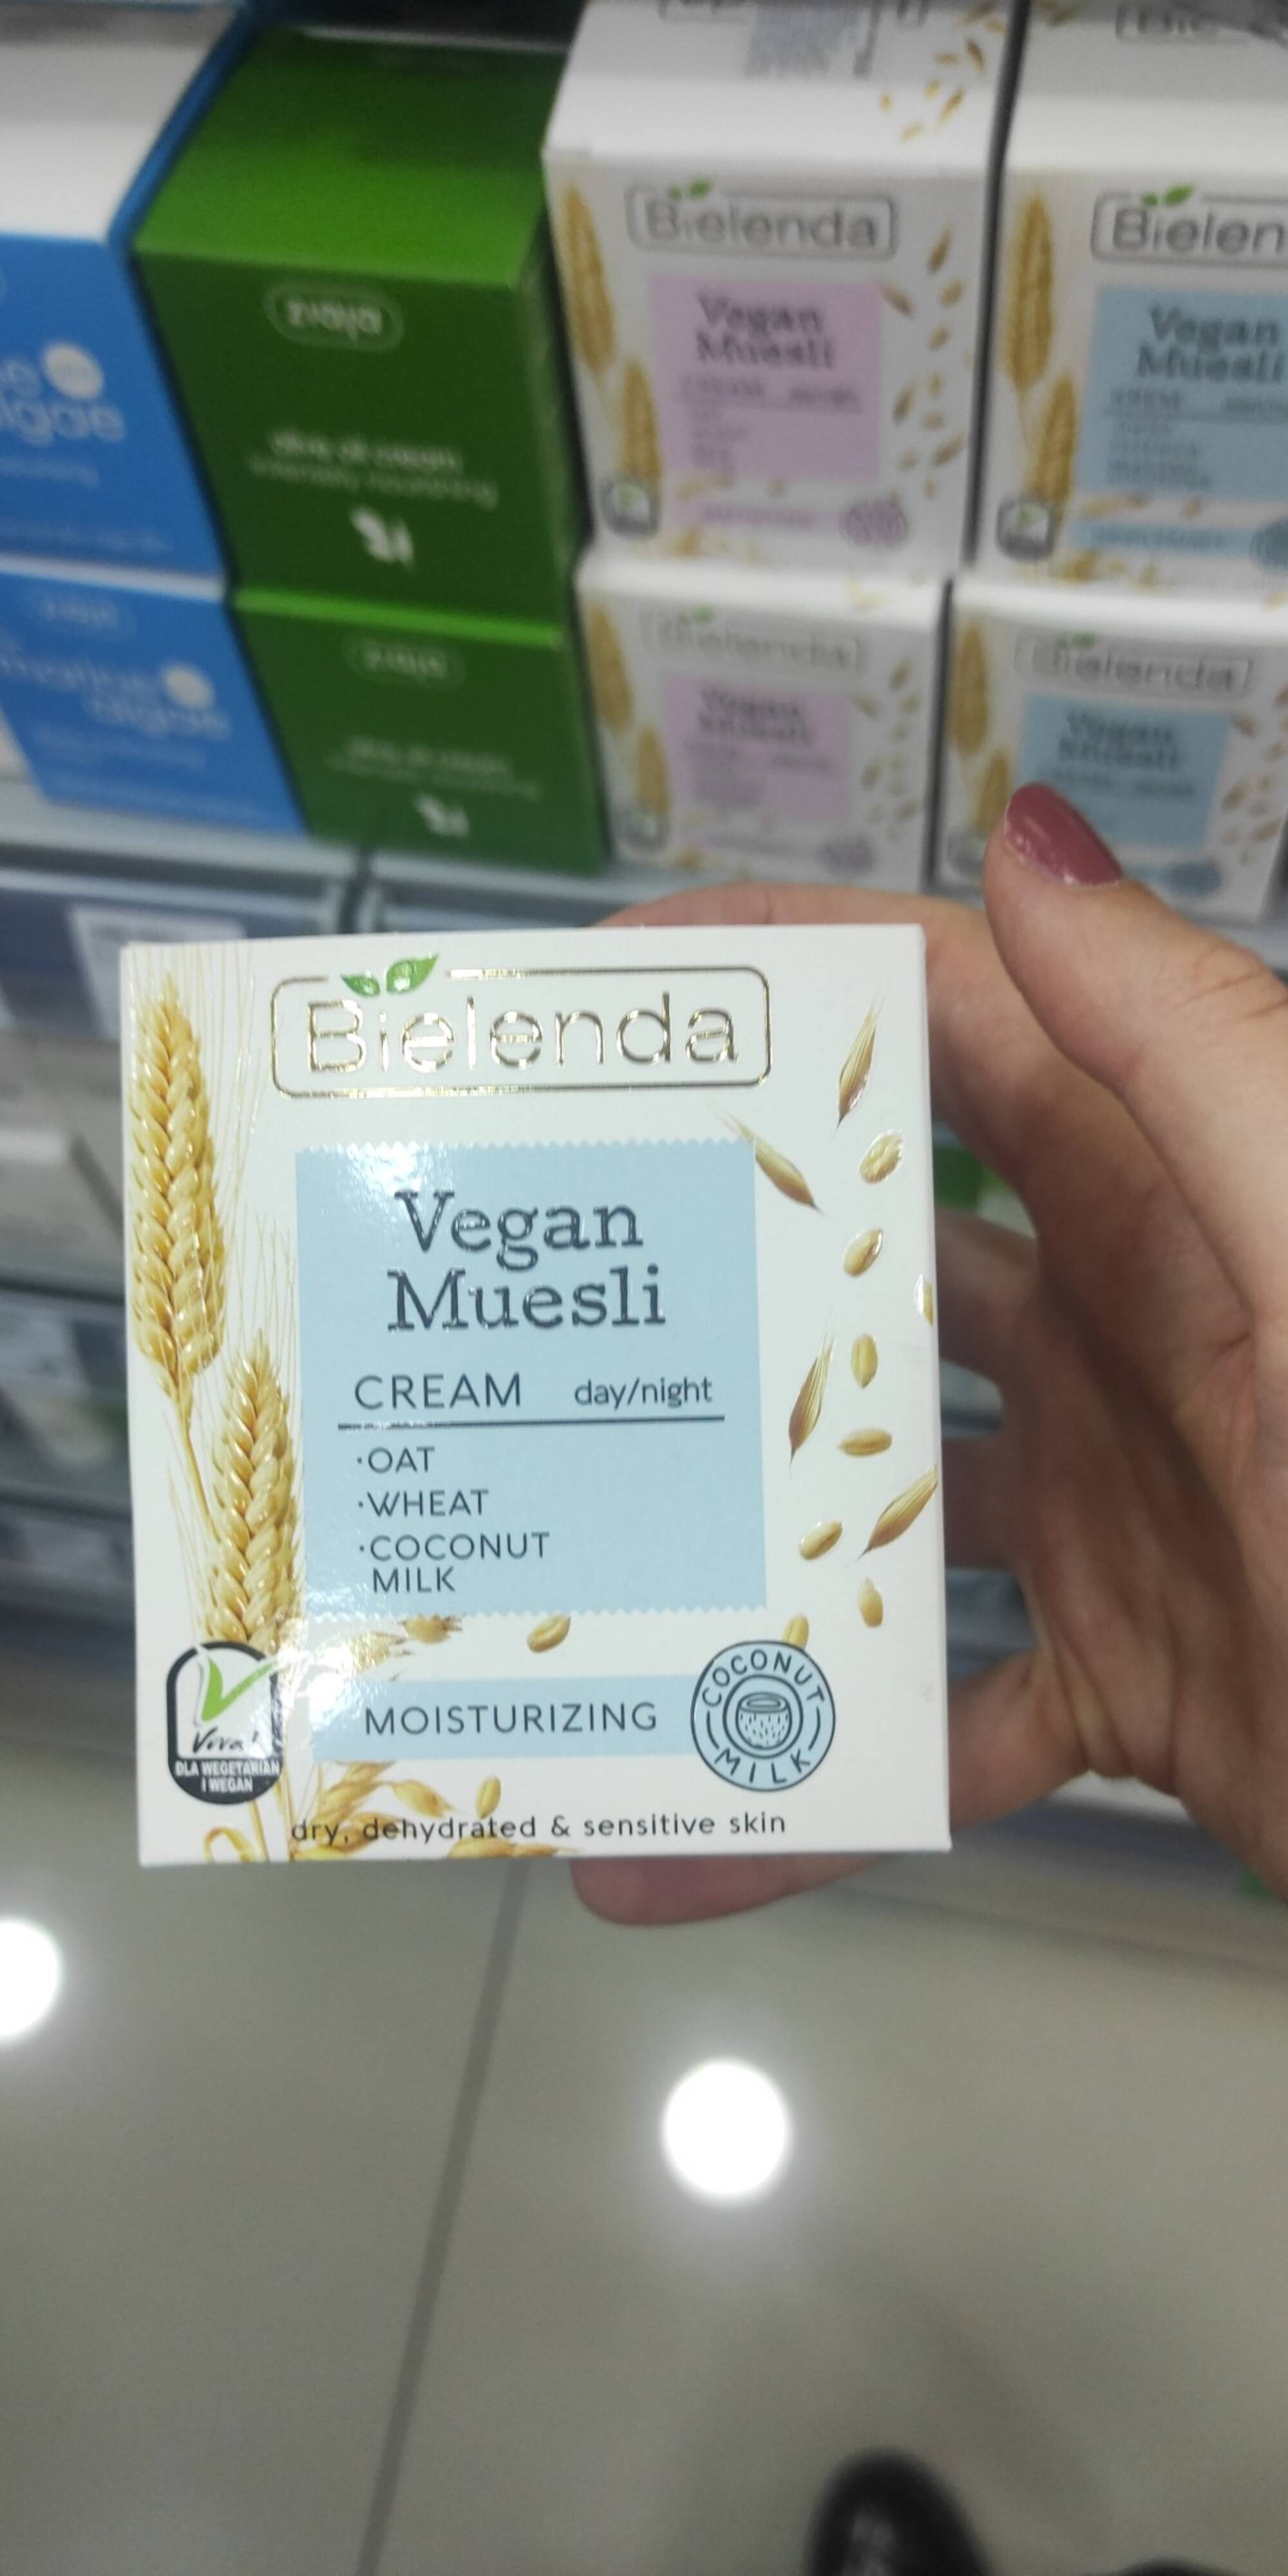 BIELENDA - Vegan muesli - Cream moisturizing day/night